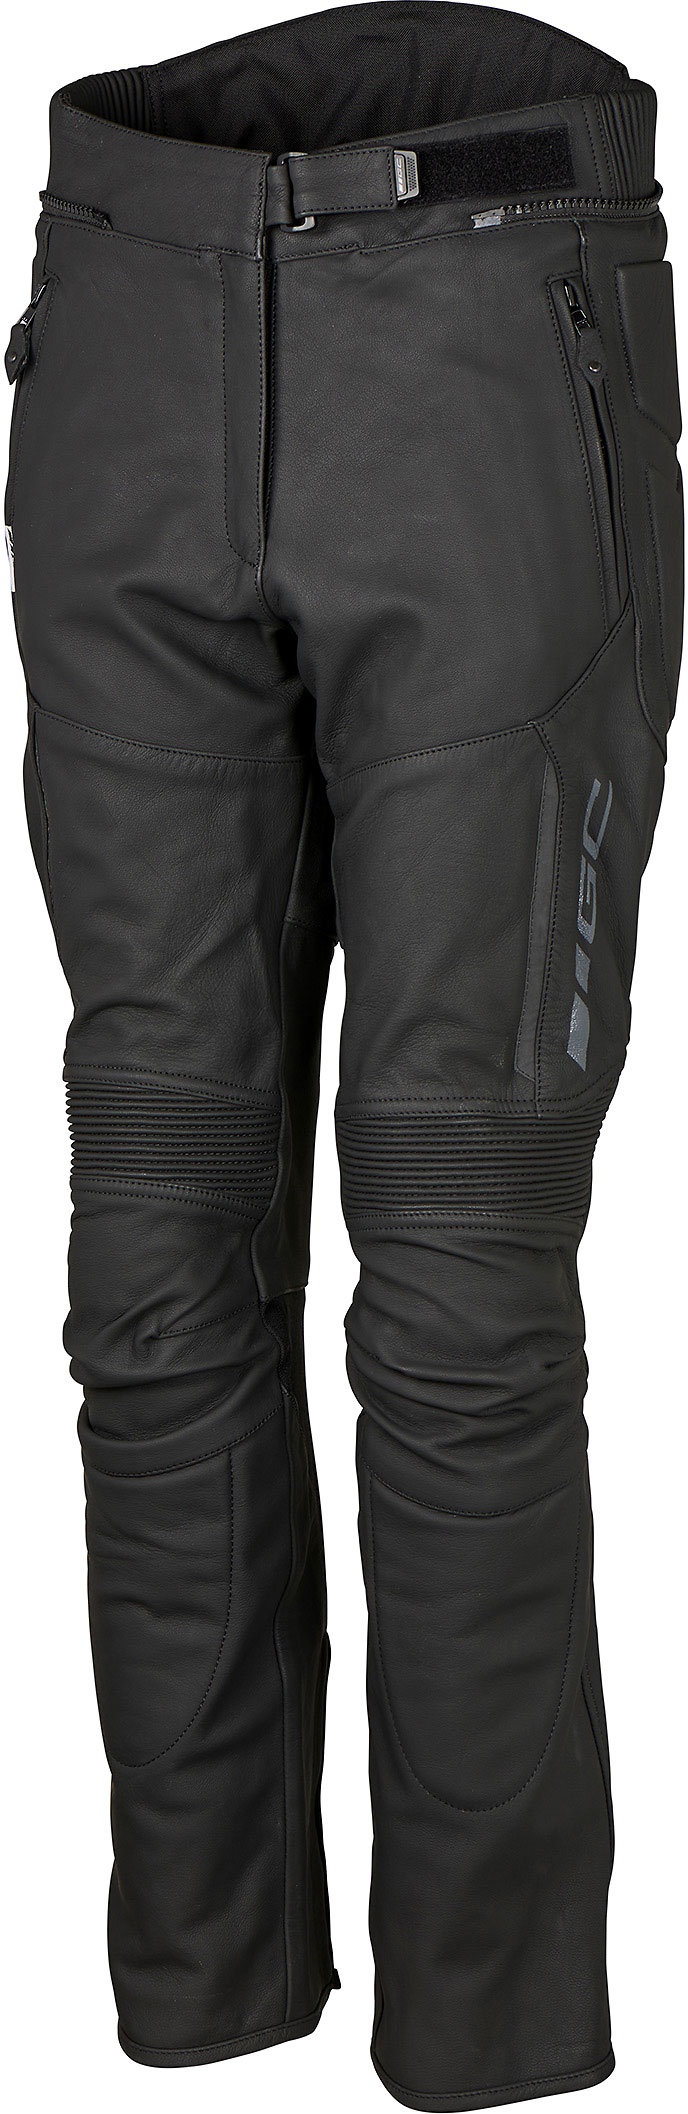 GC Bikewear Sienna, pantalon en cuir pour femmes - Noir - 40